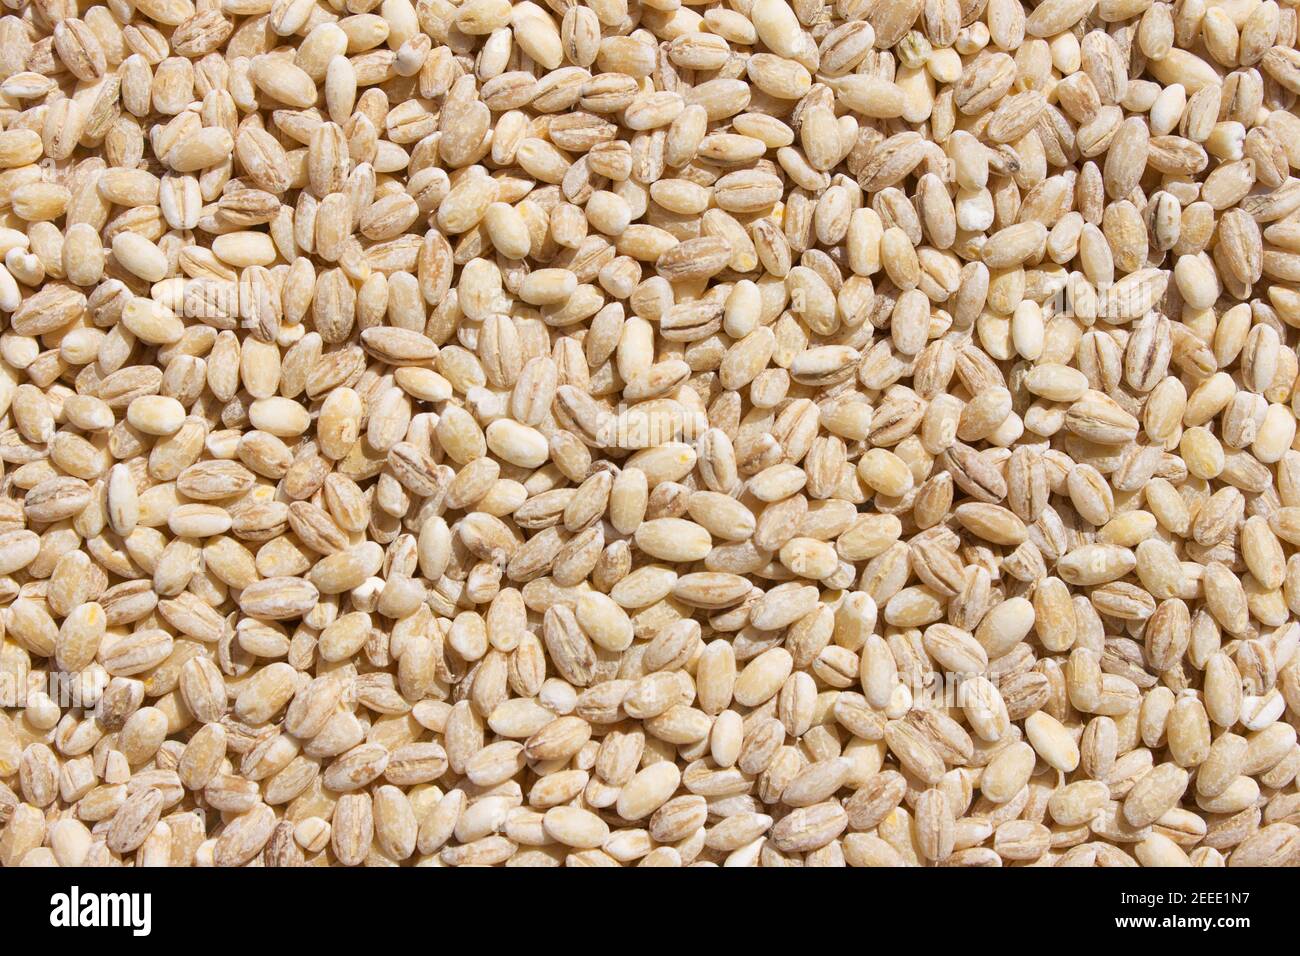 Two-row barley with husks Stock Photo